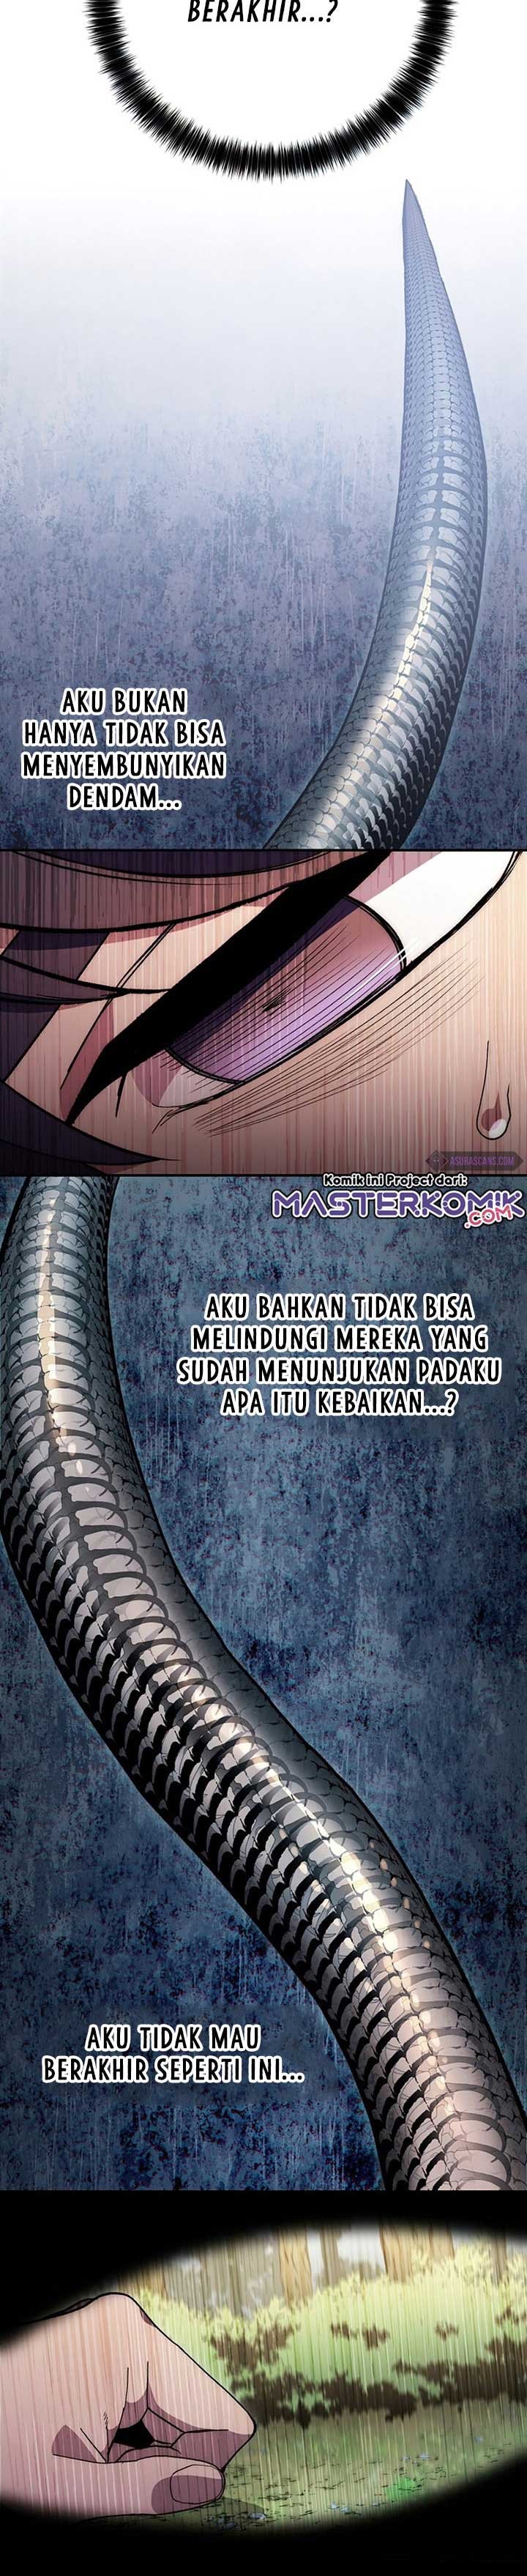 Legend Of Asura The Venom Dragon Chapter 66